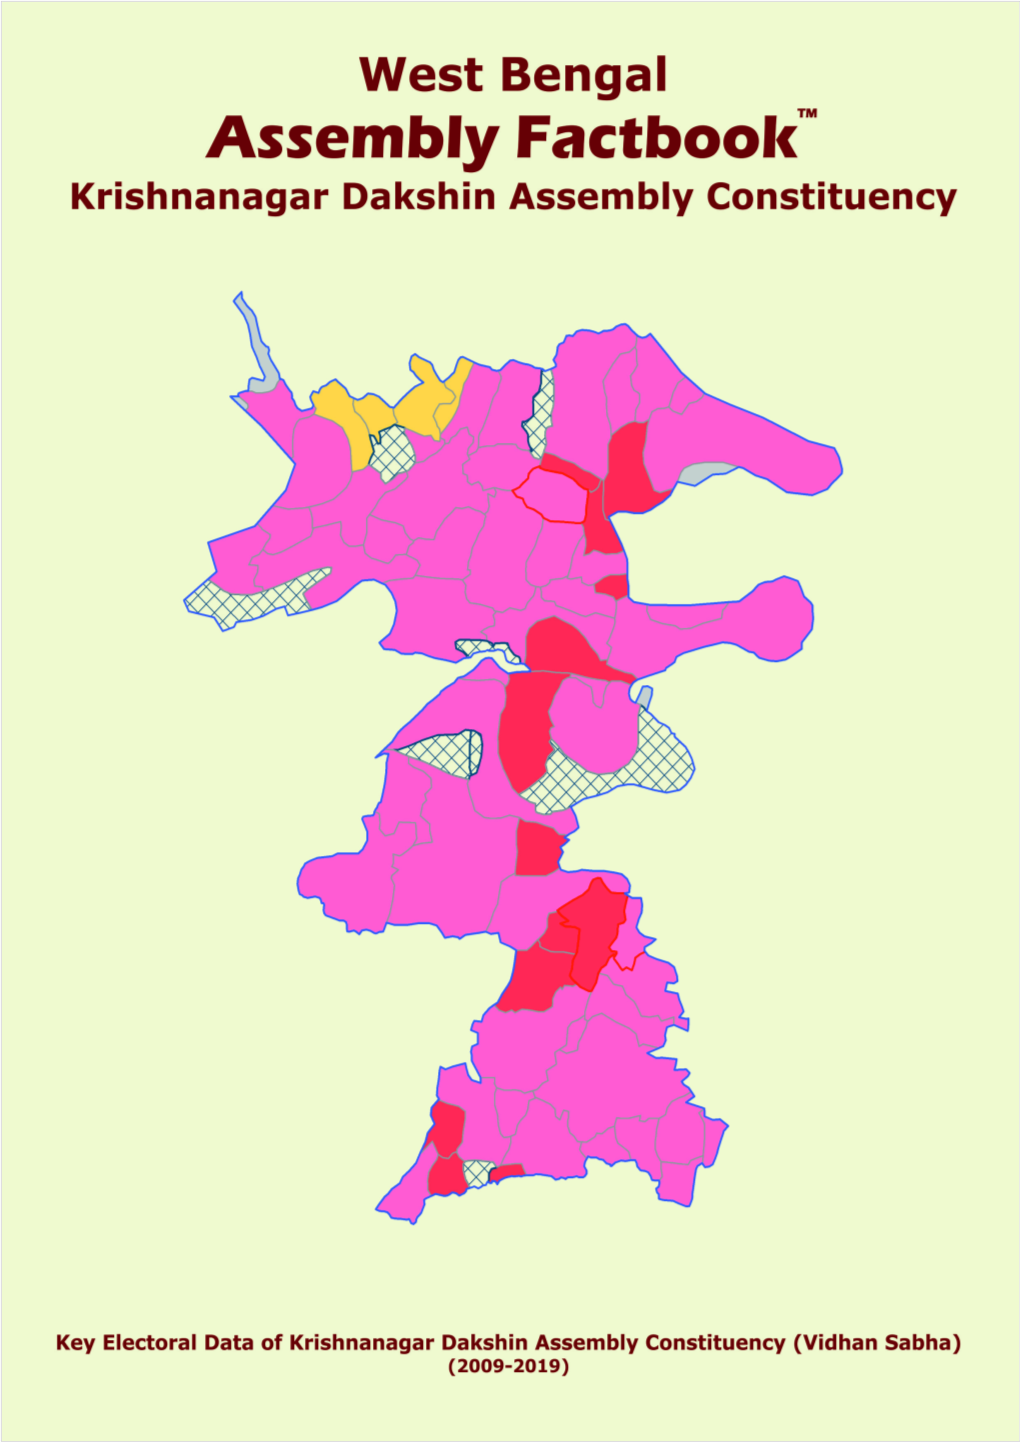 Krishnanagar Dakshin Assembly West Bengal Factbook